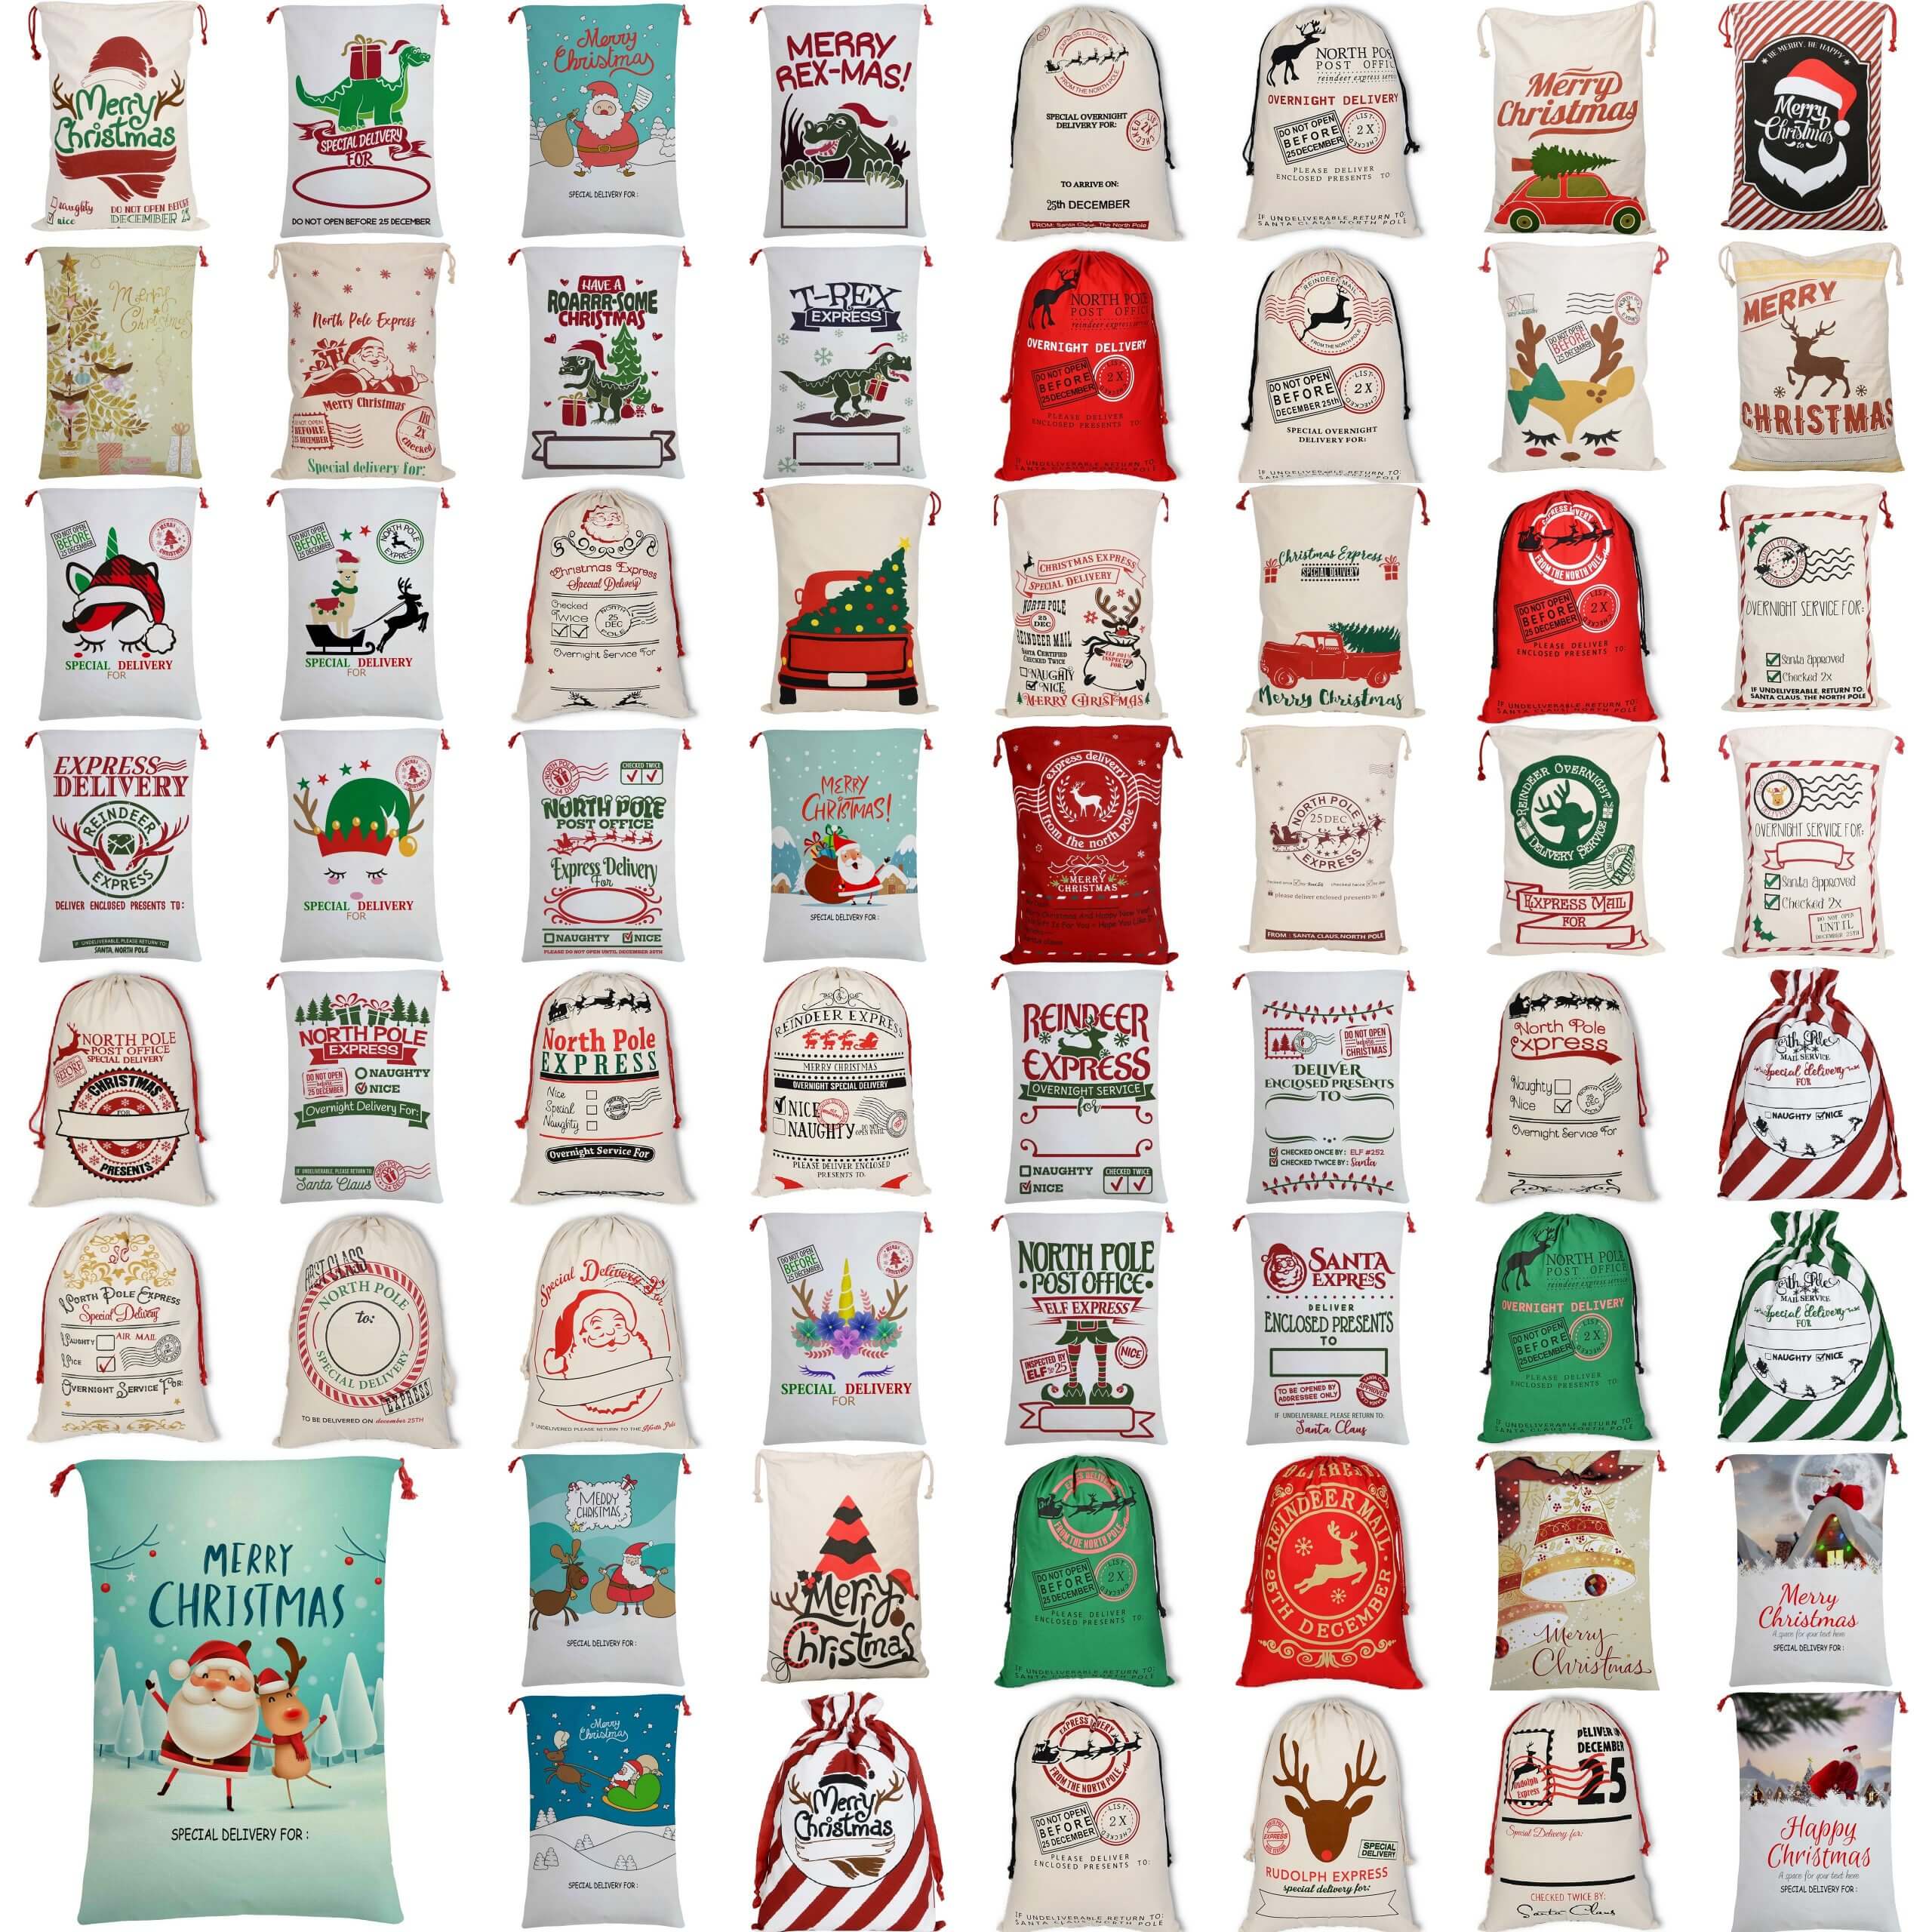 50x70cm Canvas Hessian Christmas Santa Sack Xmas Stocking Reindeer Kids Gift Bag, Cream - Car Gift Express - SILBERSHELL